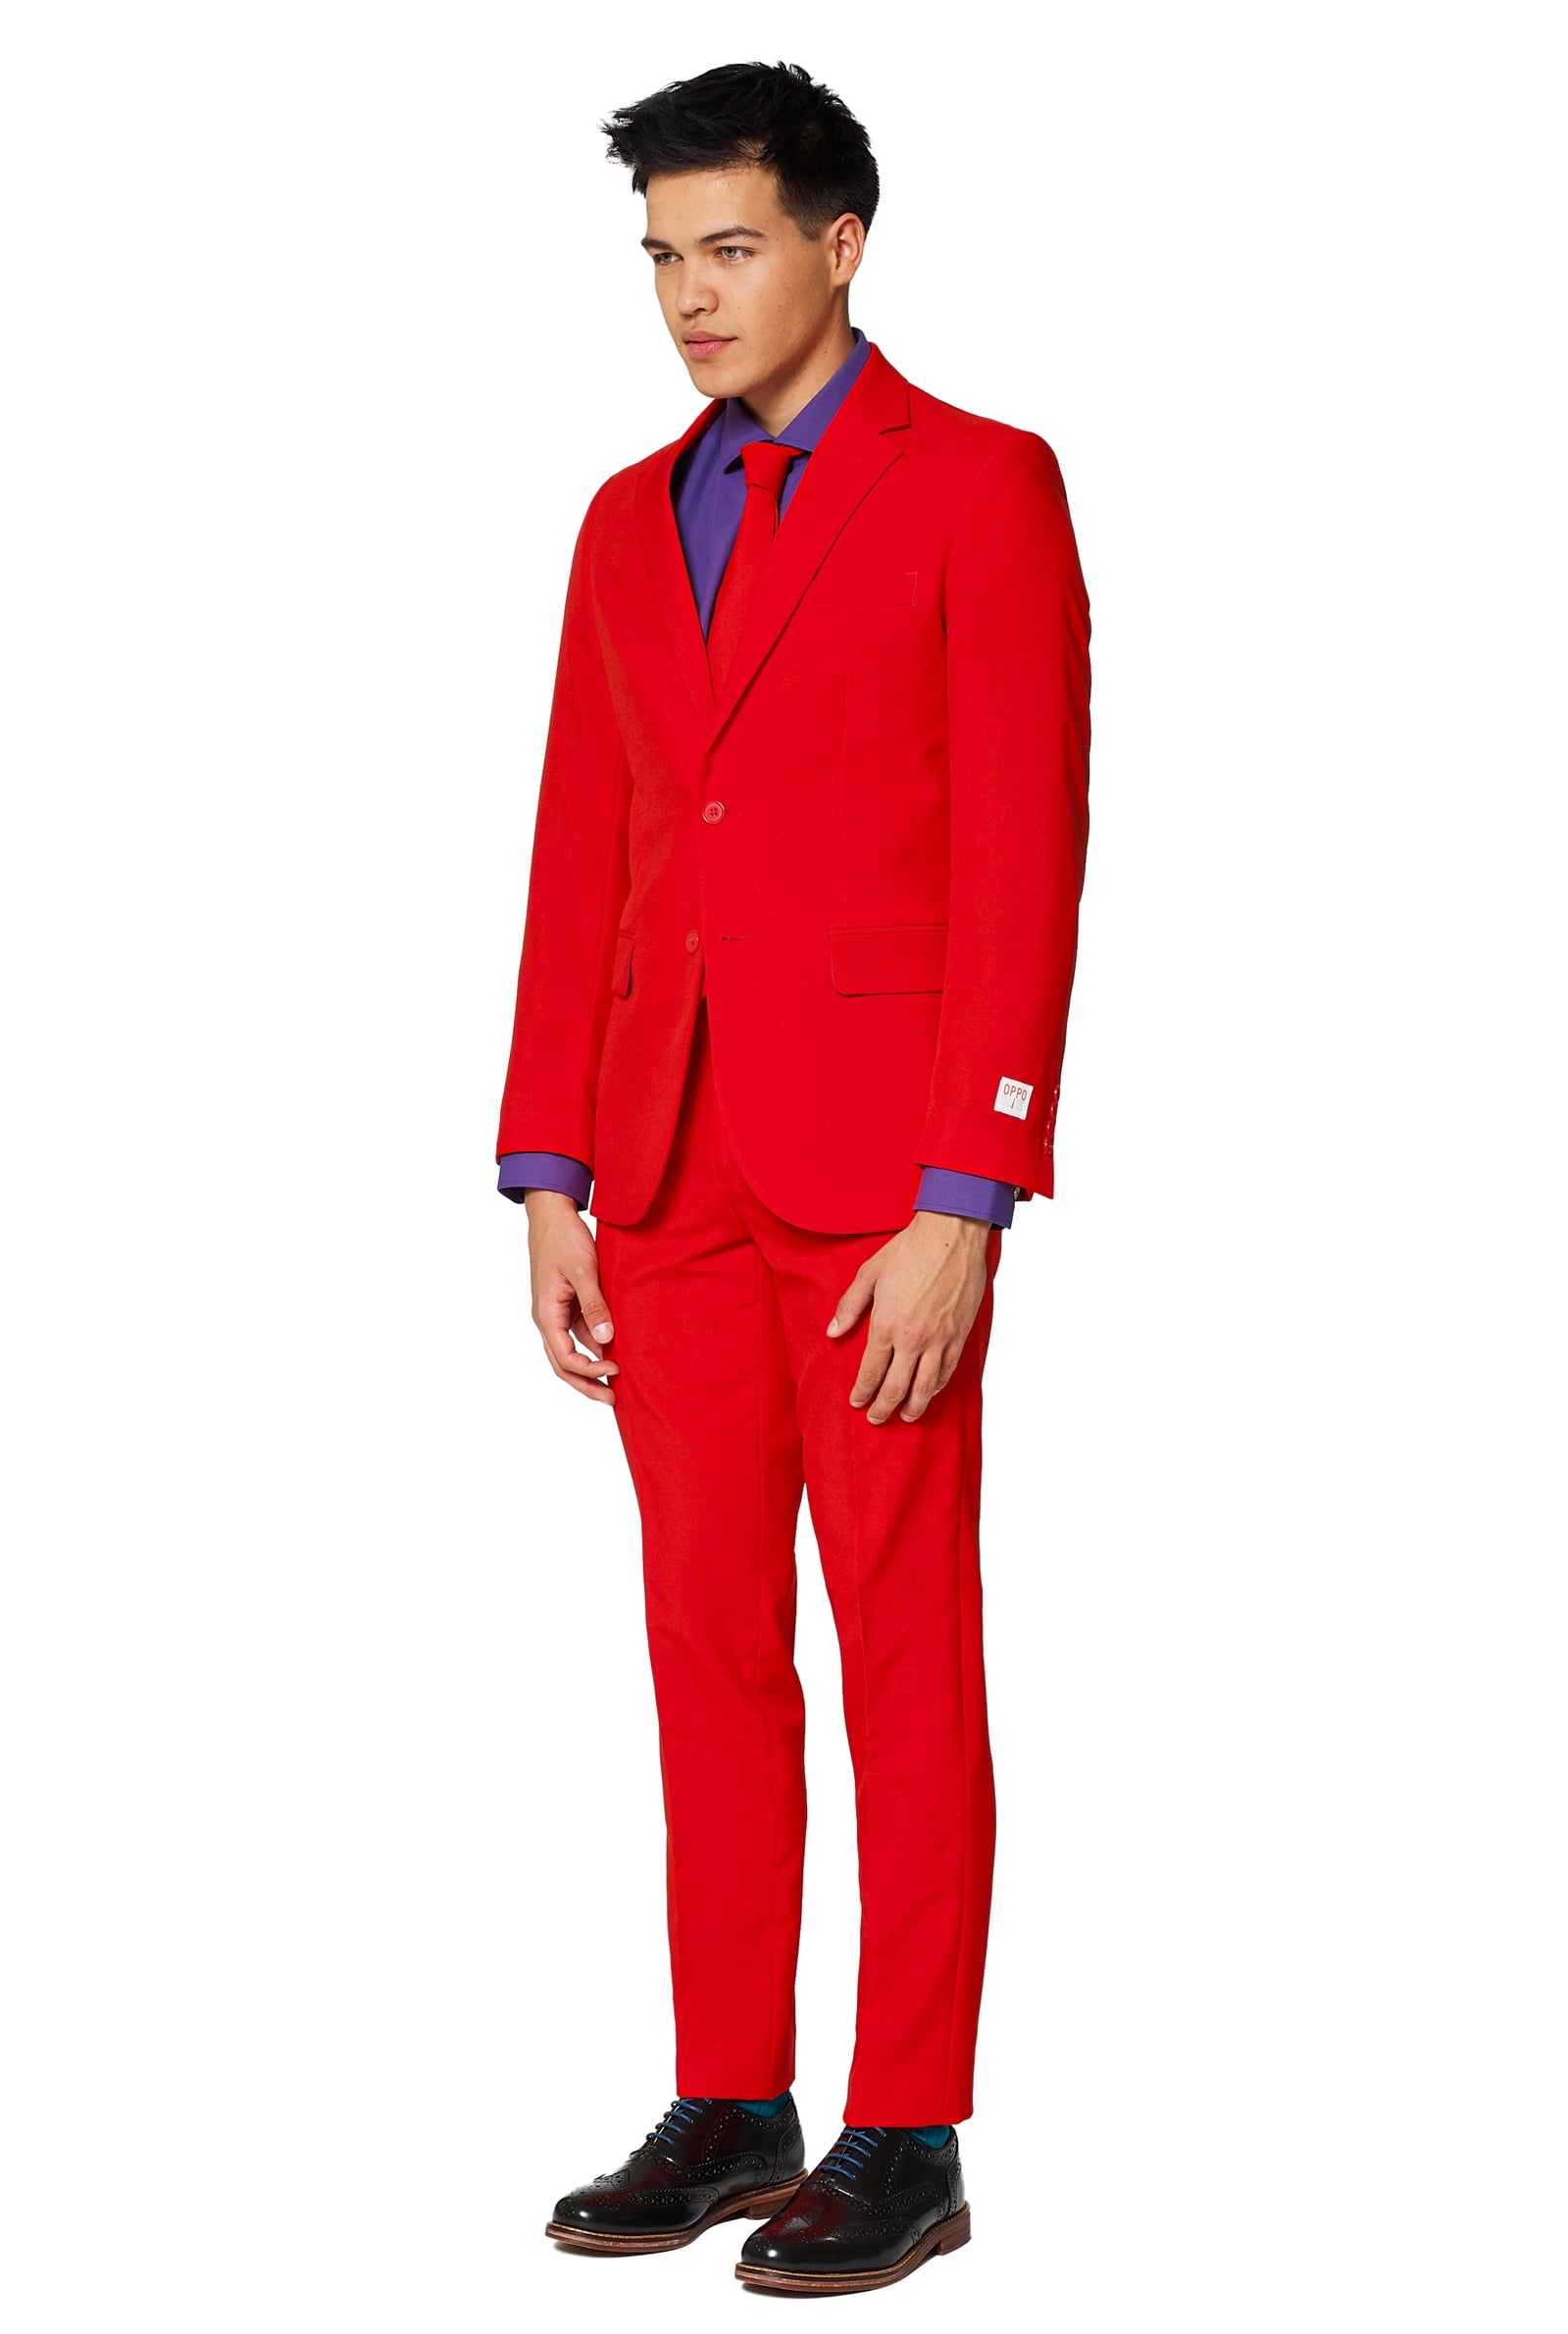 OppoSuits - OppoSuits Men's Red Devil Solid Color Suit - Walmart.com ...